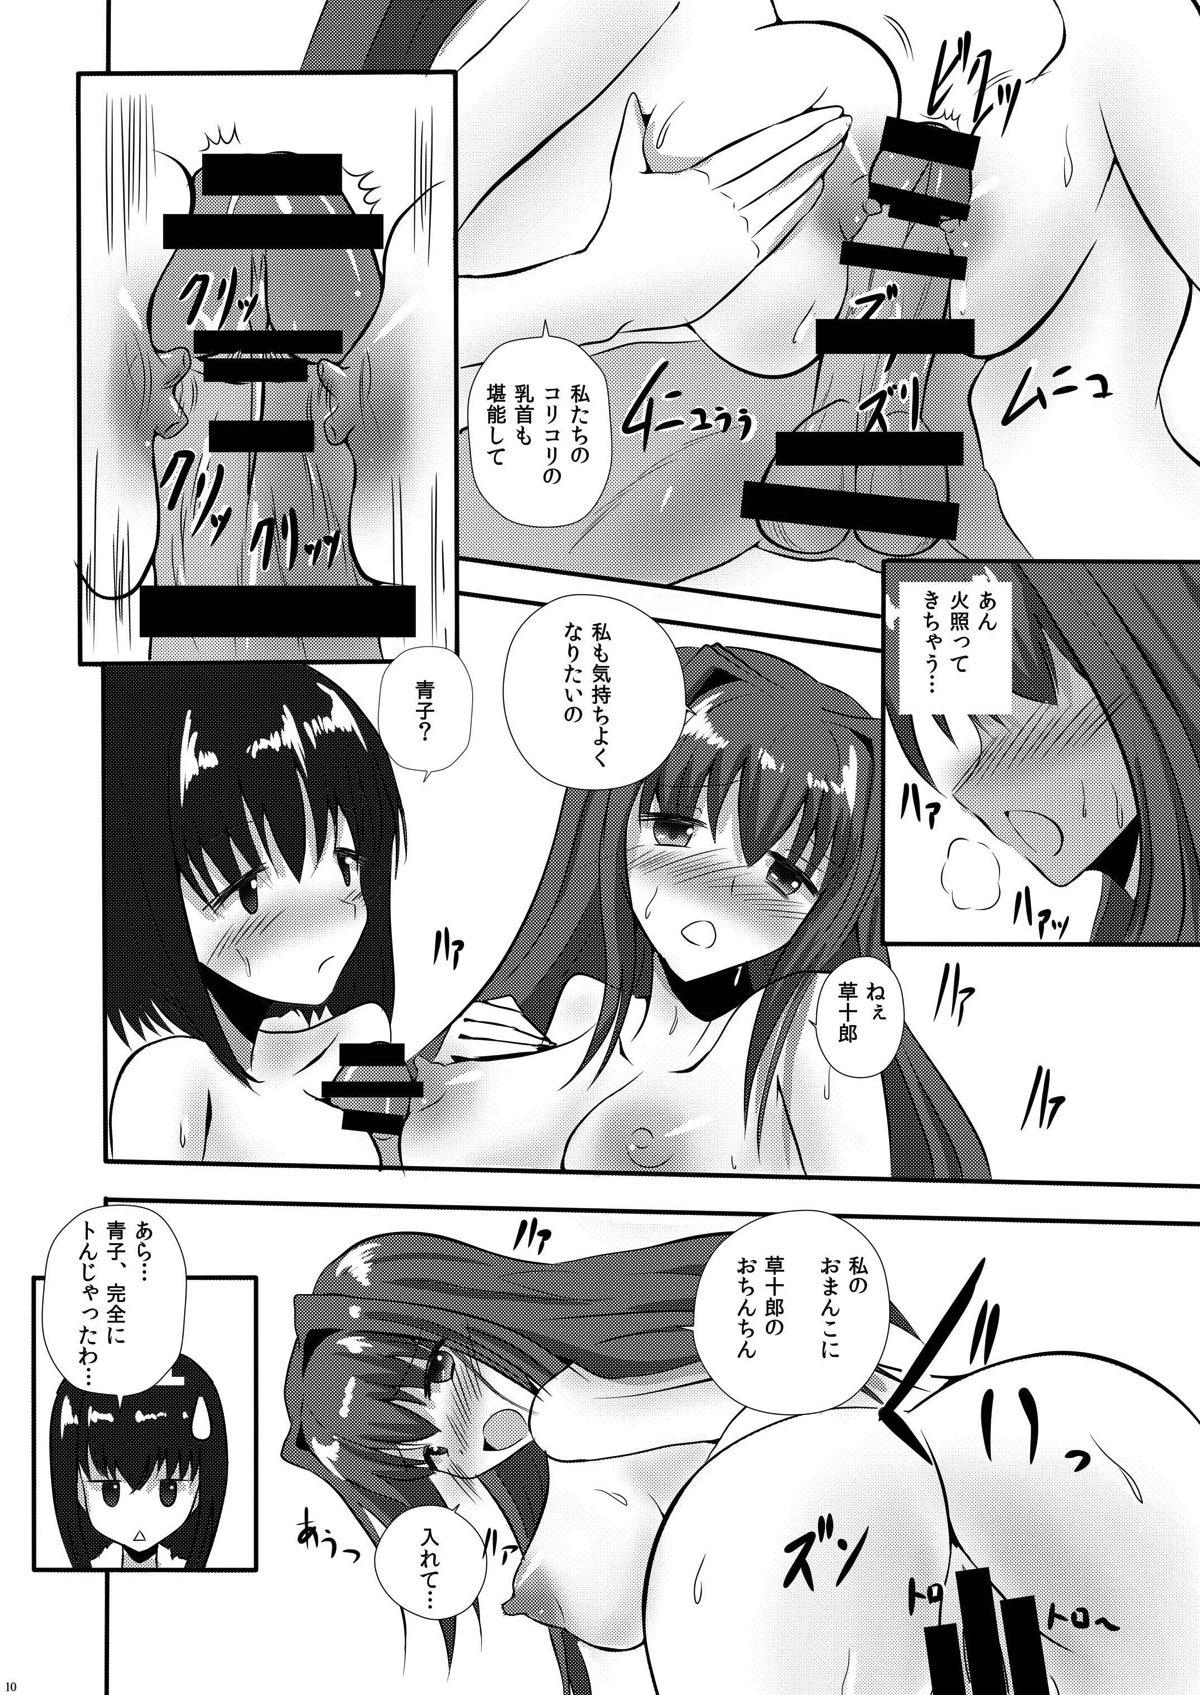 Perverted never let me down again - Mahou tsukai no yoru Realamateur - Page 11